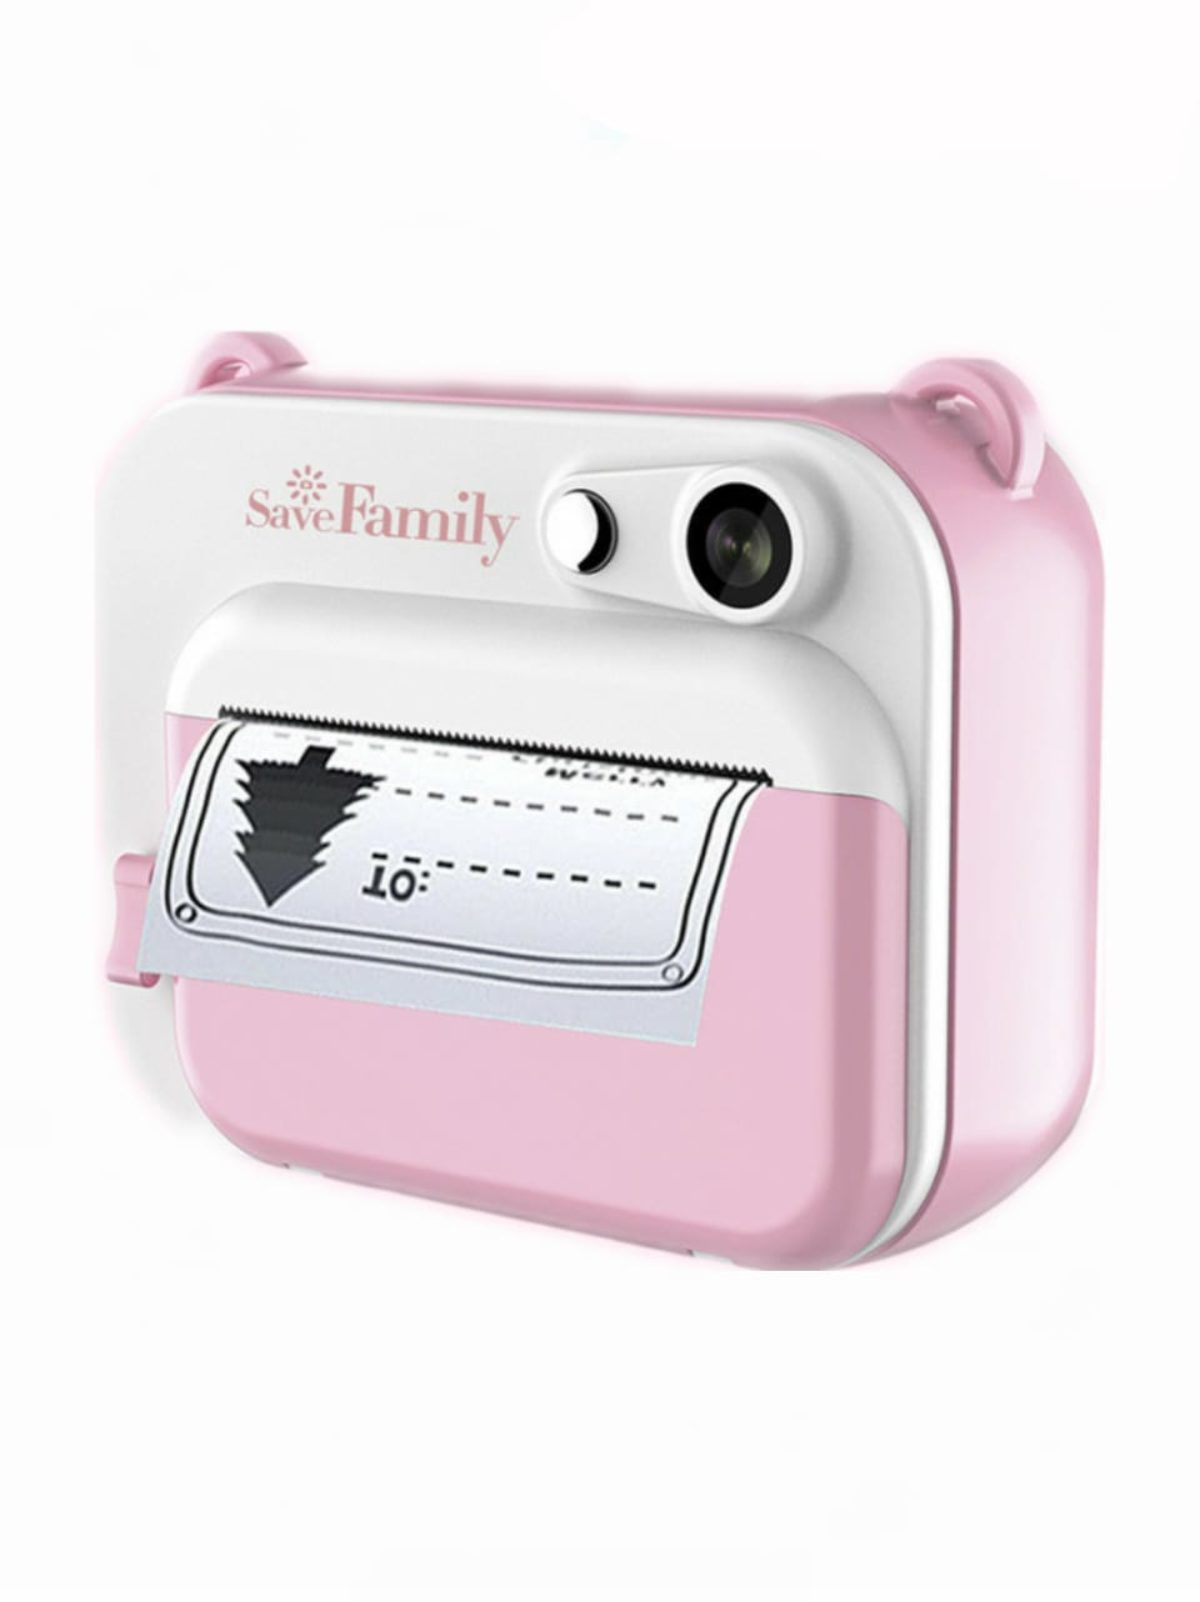 Dempsey Tratado mercado Comprar Save Family Cámara instantánea para Niños Sweet Pink